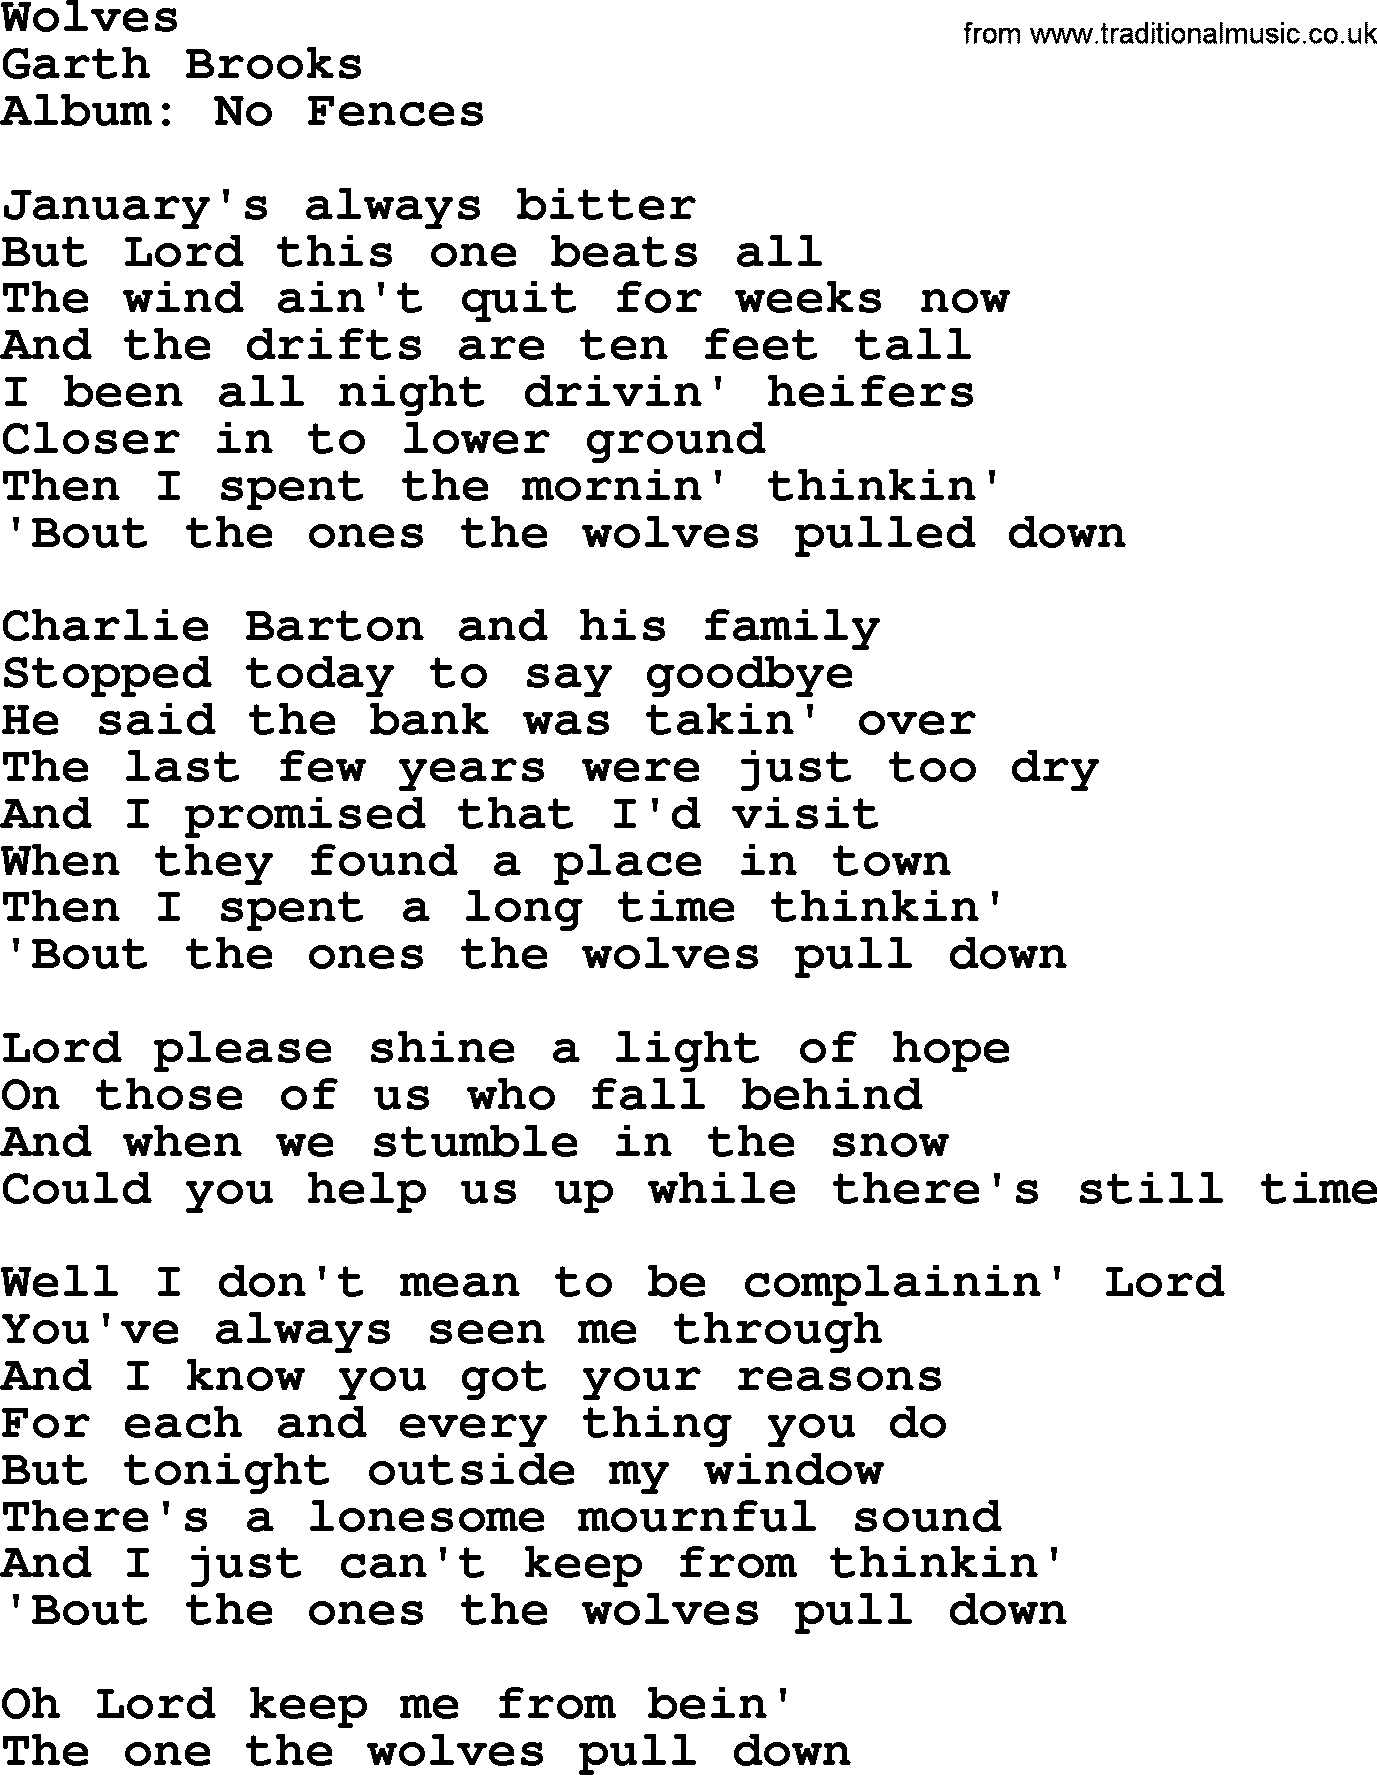 Garth Brooks song: Wolves, lyrics